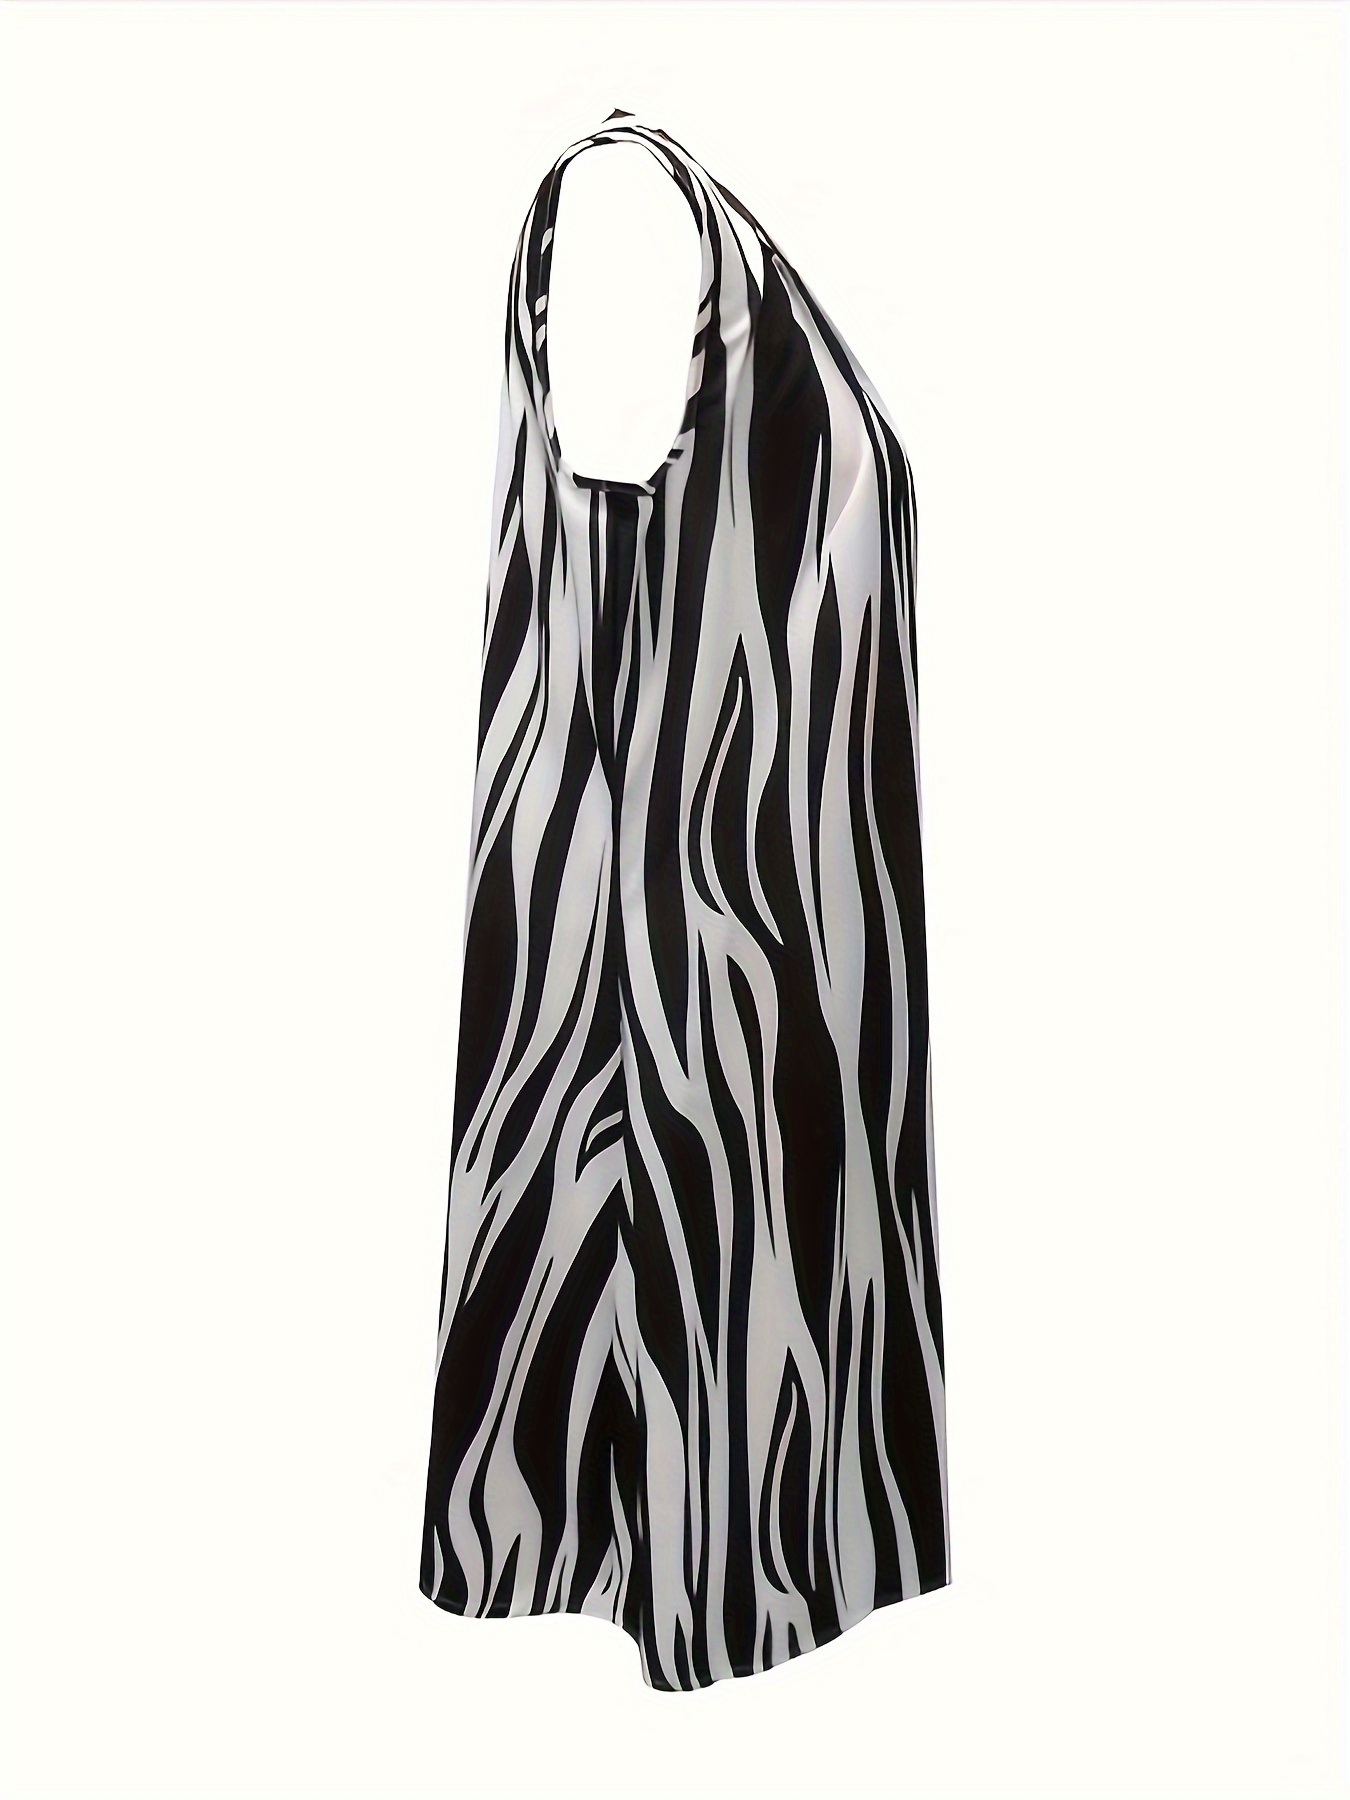 abstract ripple print dress casual v neck sleeveless dress womens clothing details 48